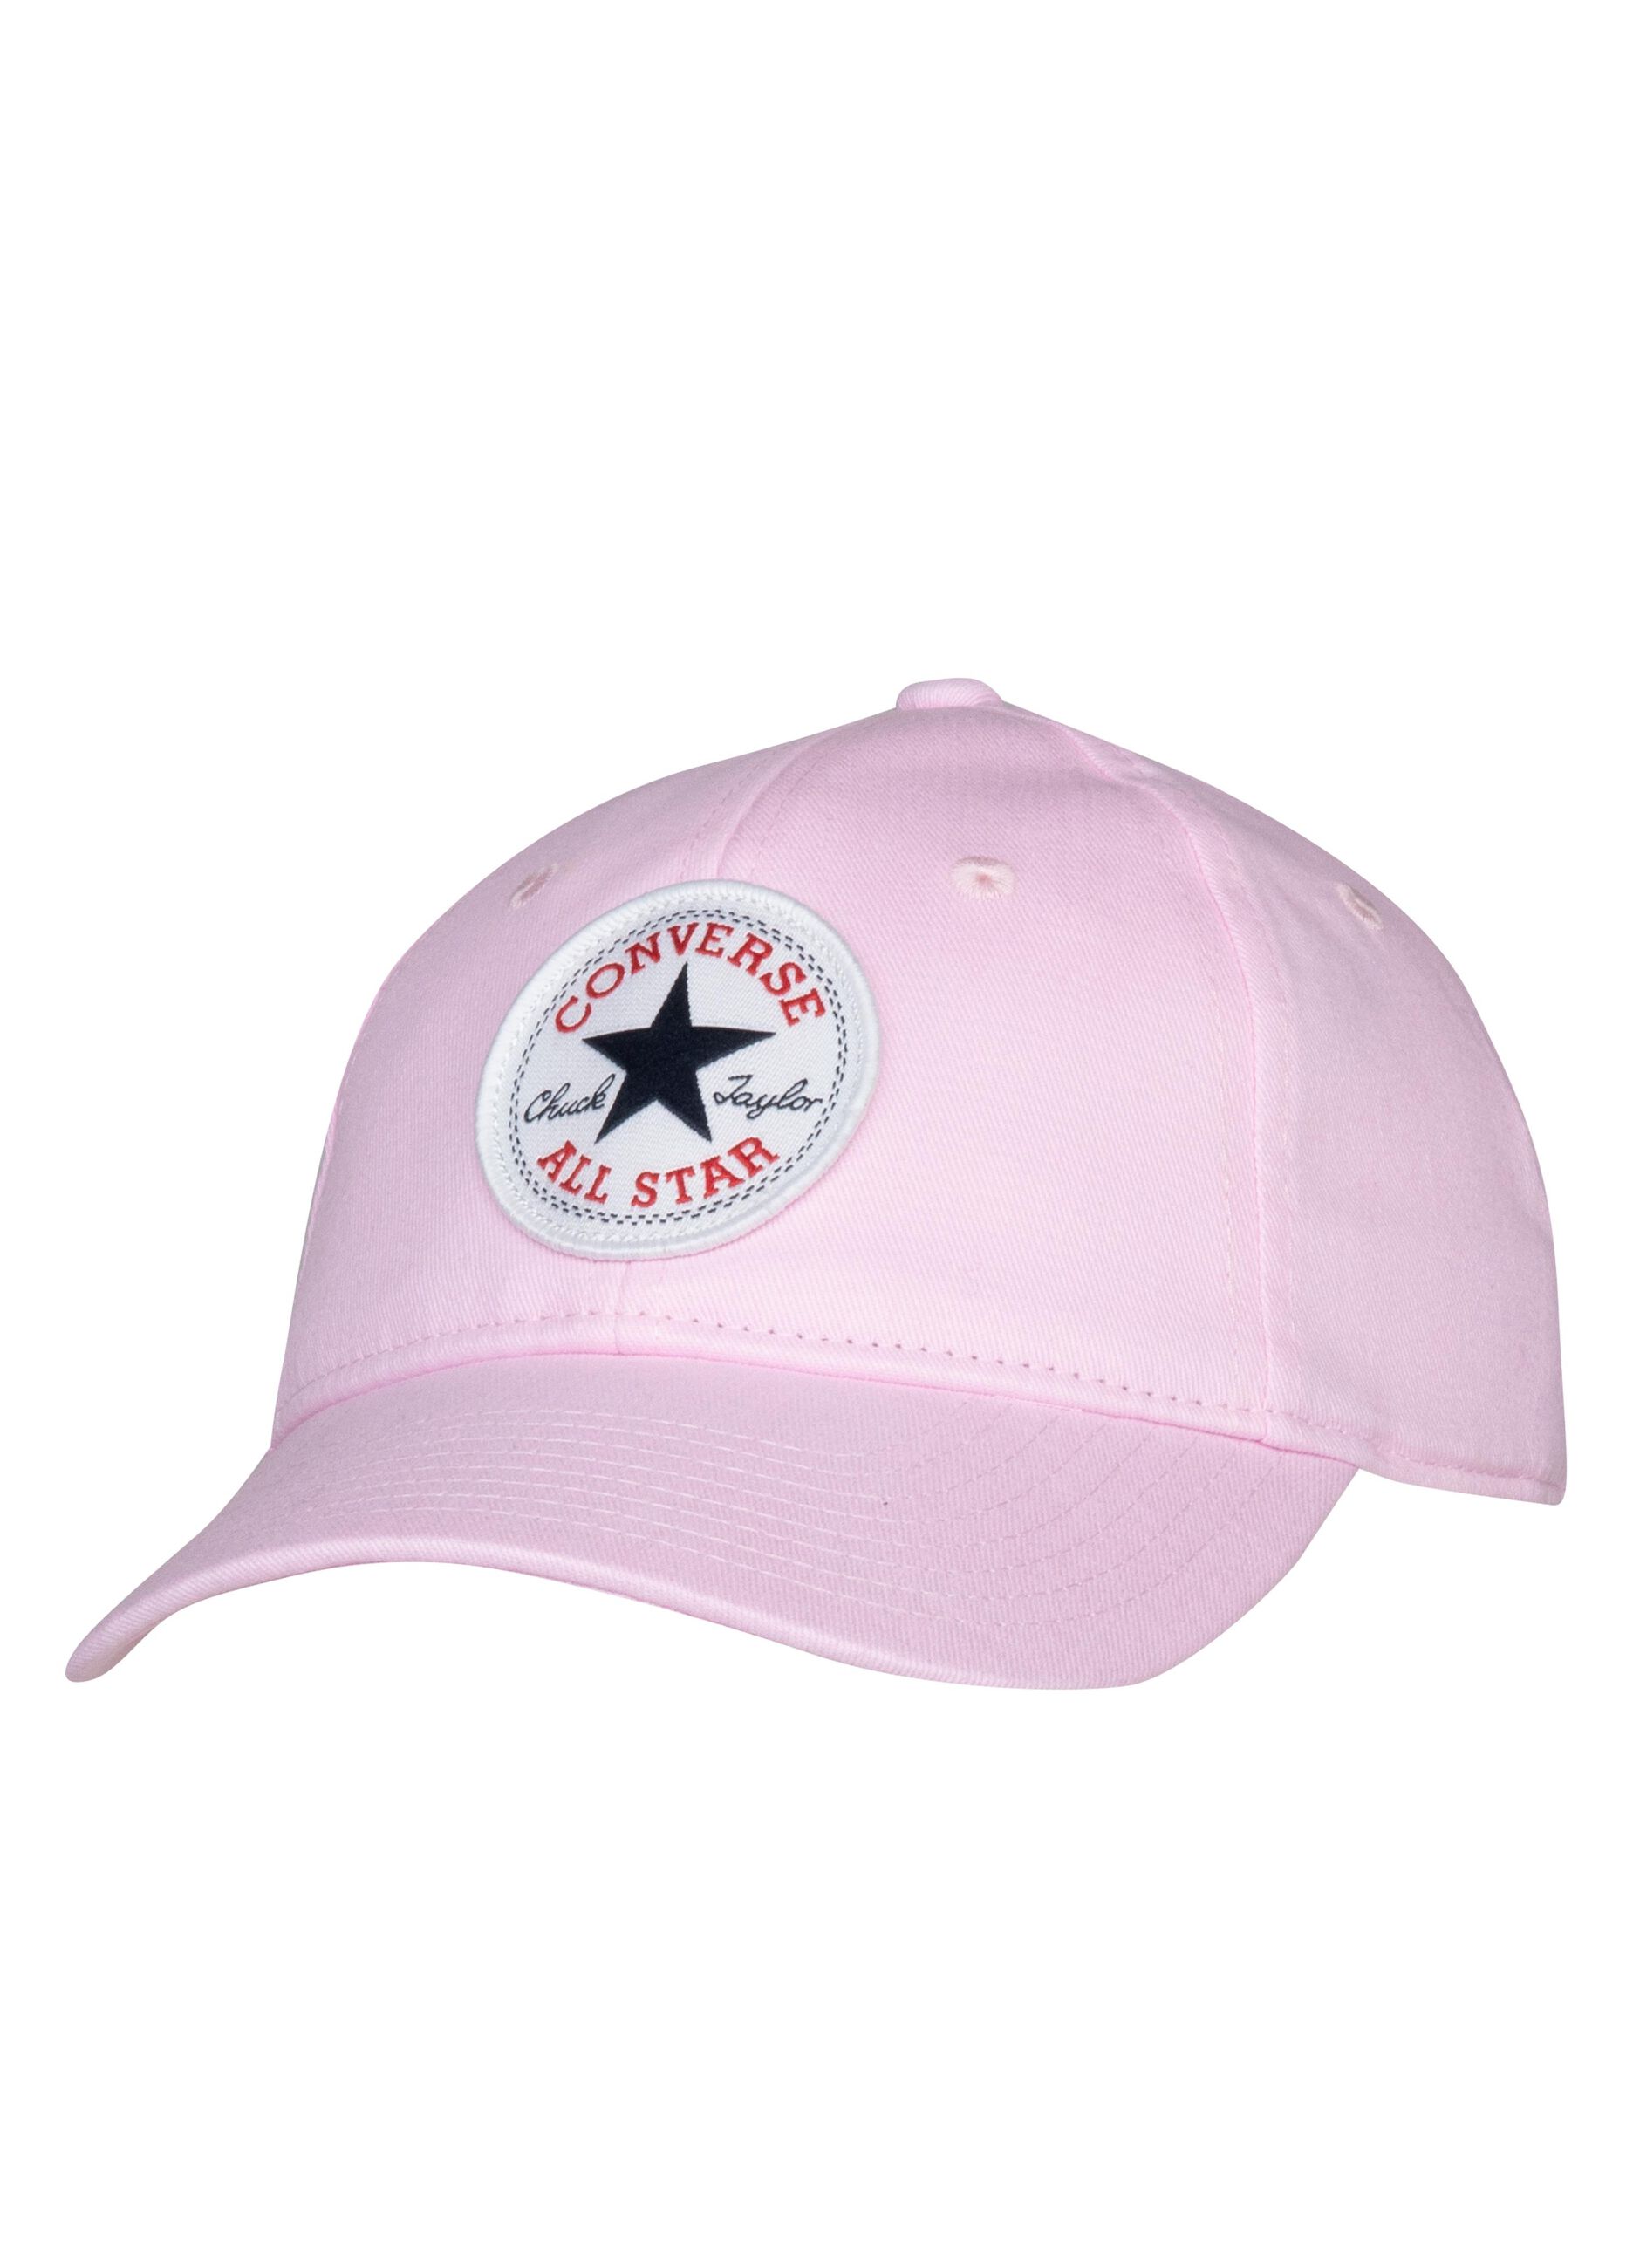 Baseball cap with Chuck Patch logo